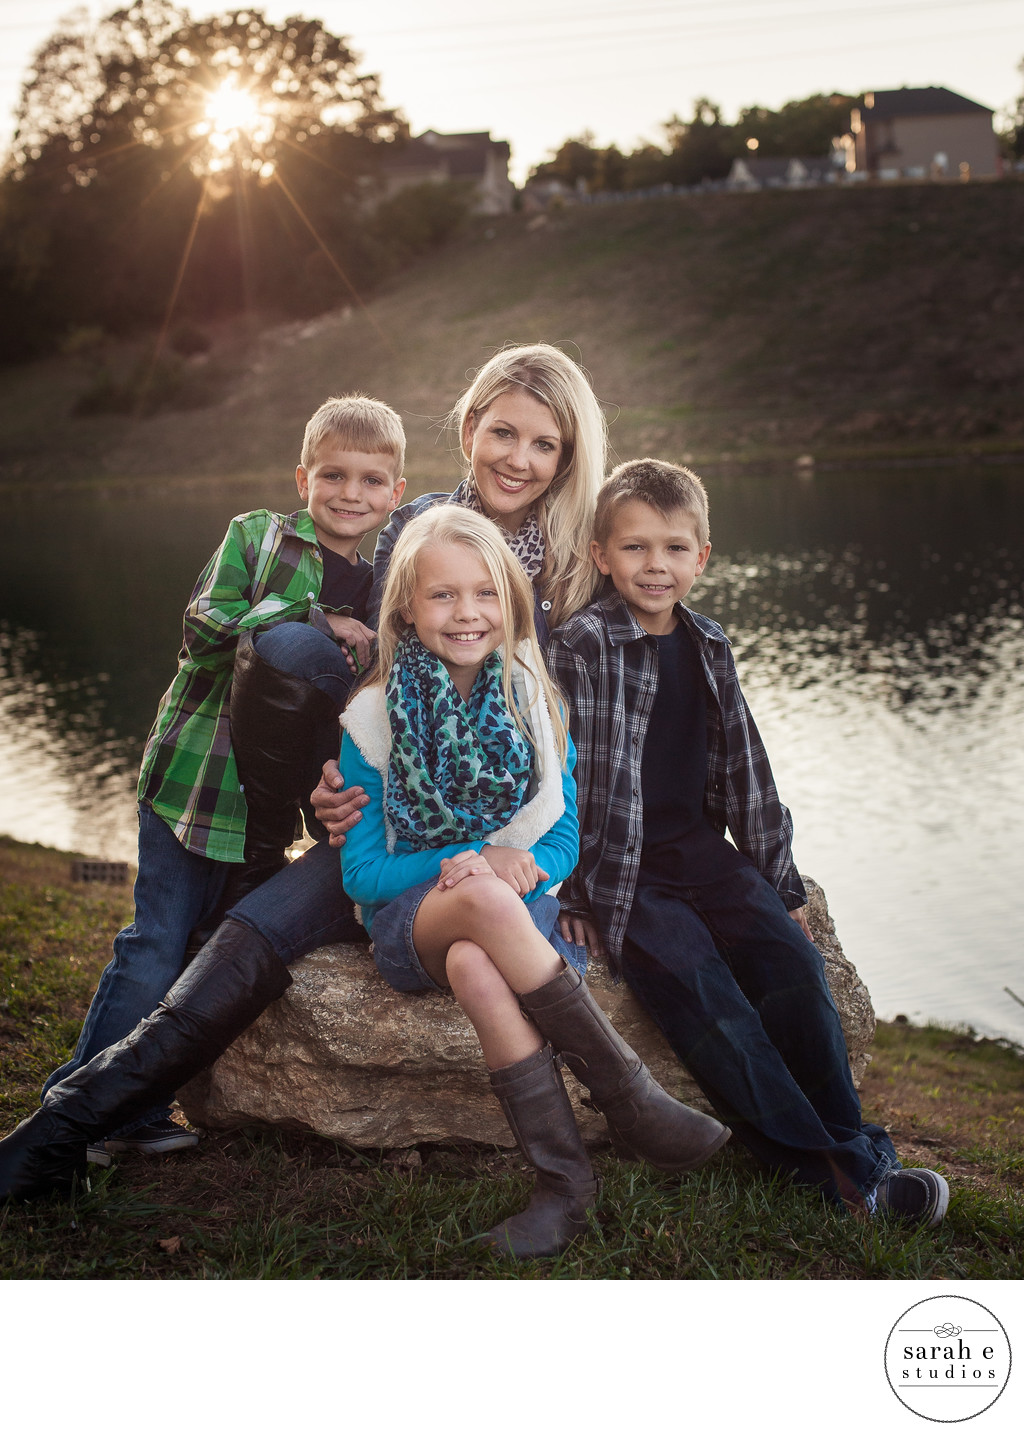 Backlight Family Photo at Lake in High Ridge, MO